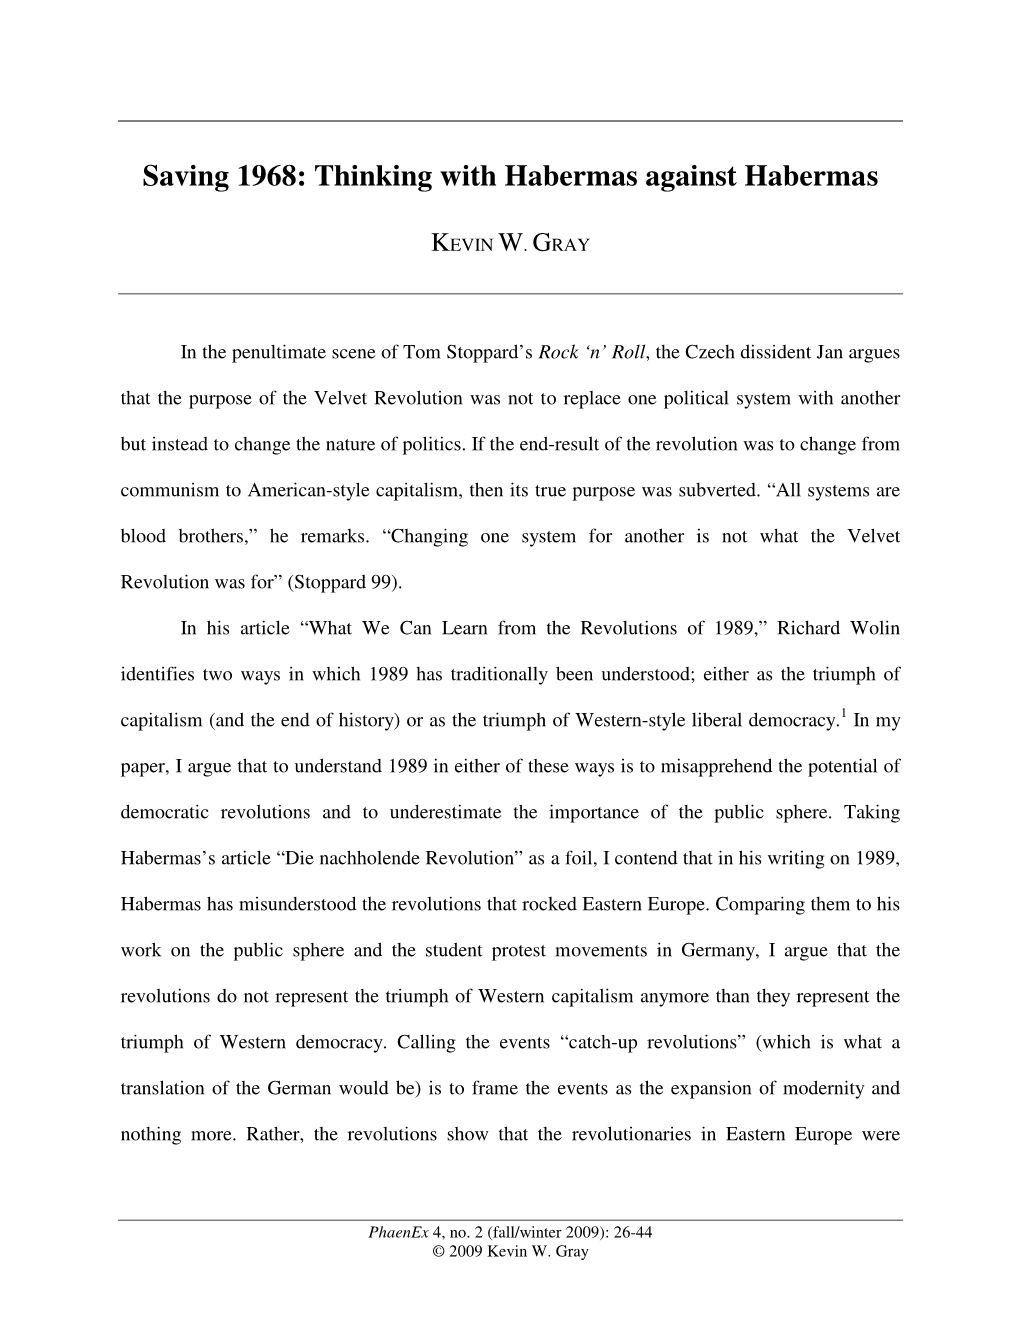 Saving 1968: Thinking with Habermas Against Habermas